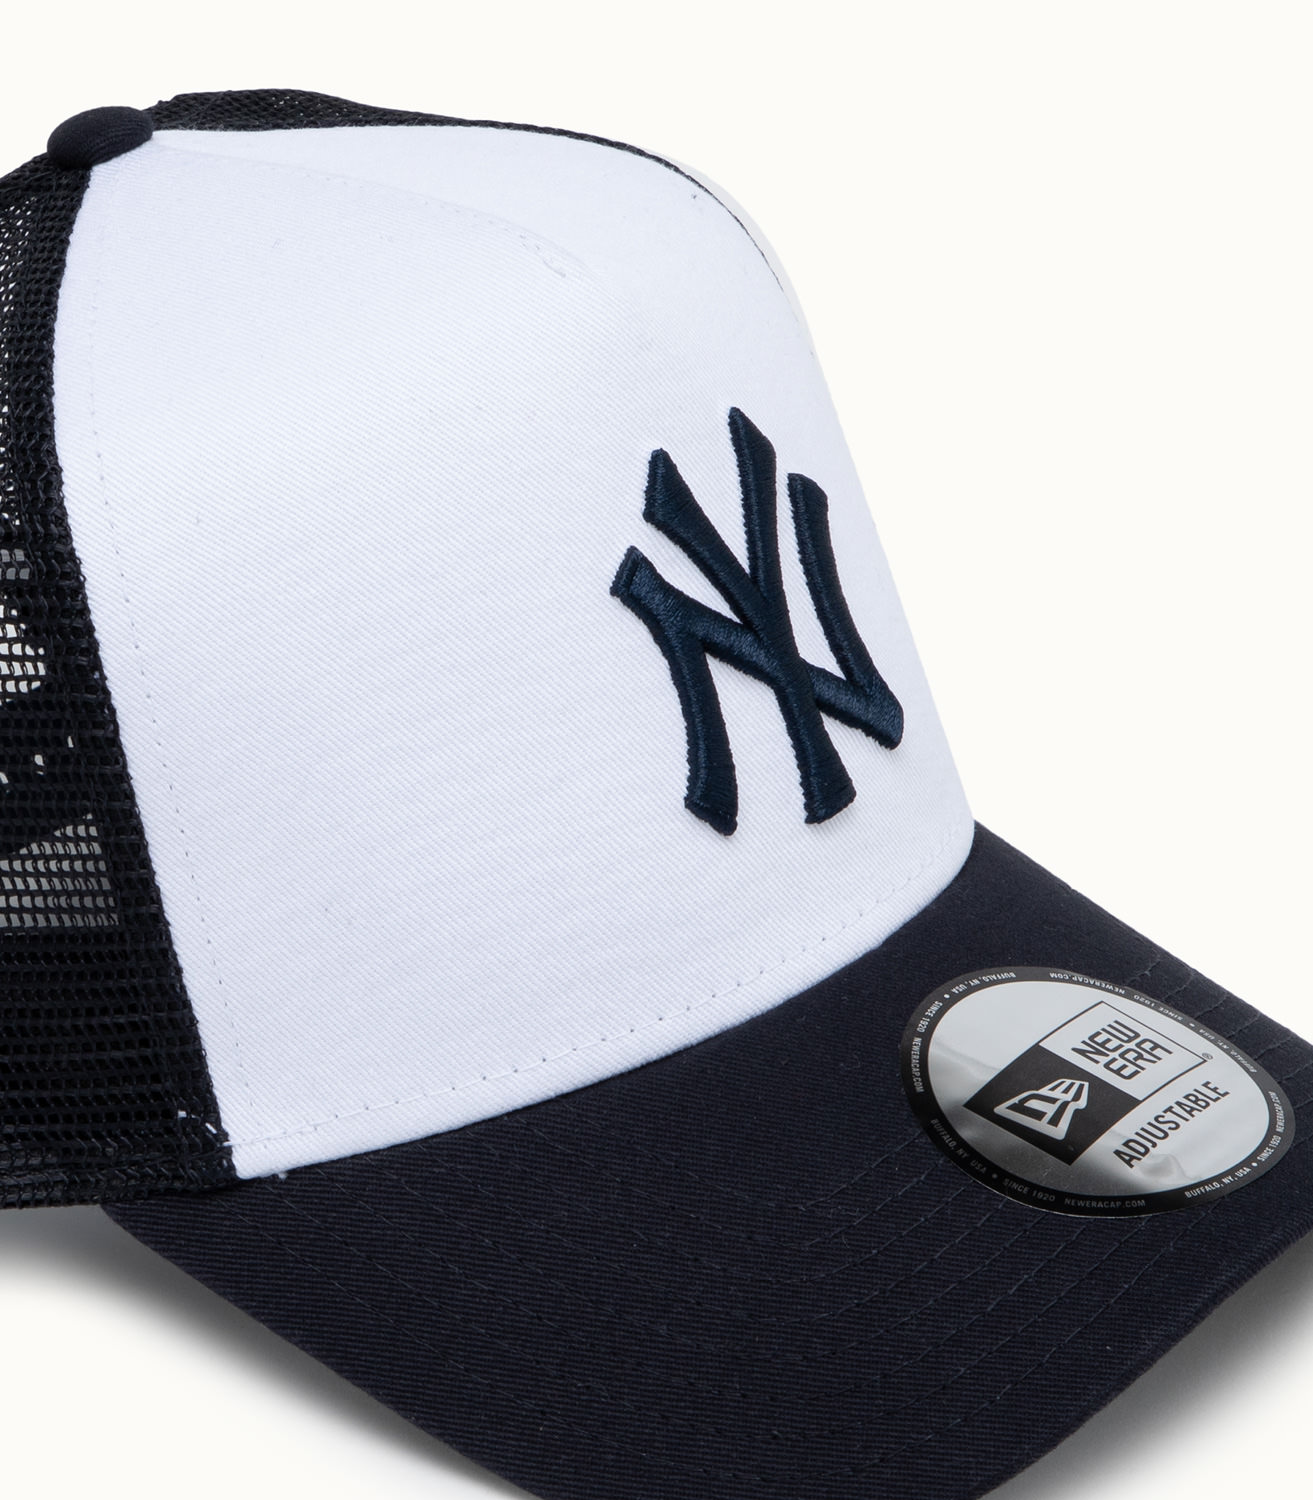 New York Yankees, Shop MLB Team Bags & Accessories